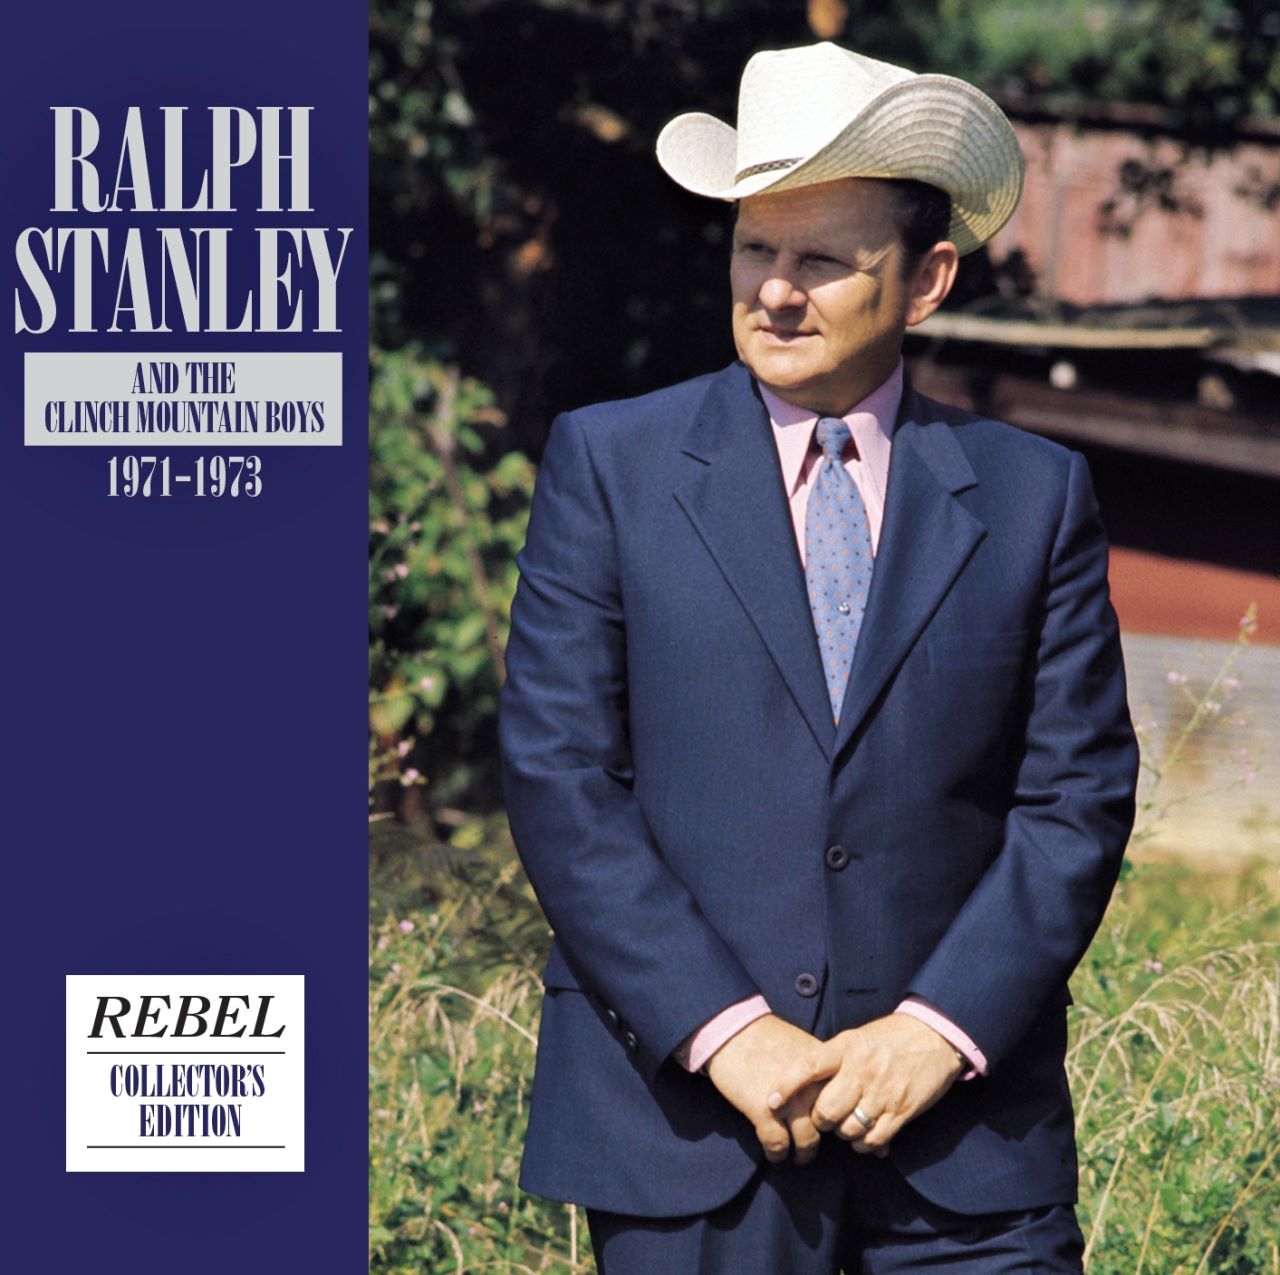 Ralph Stanley - 1971-1973 cover album